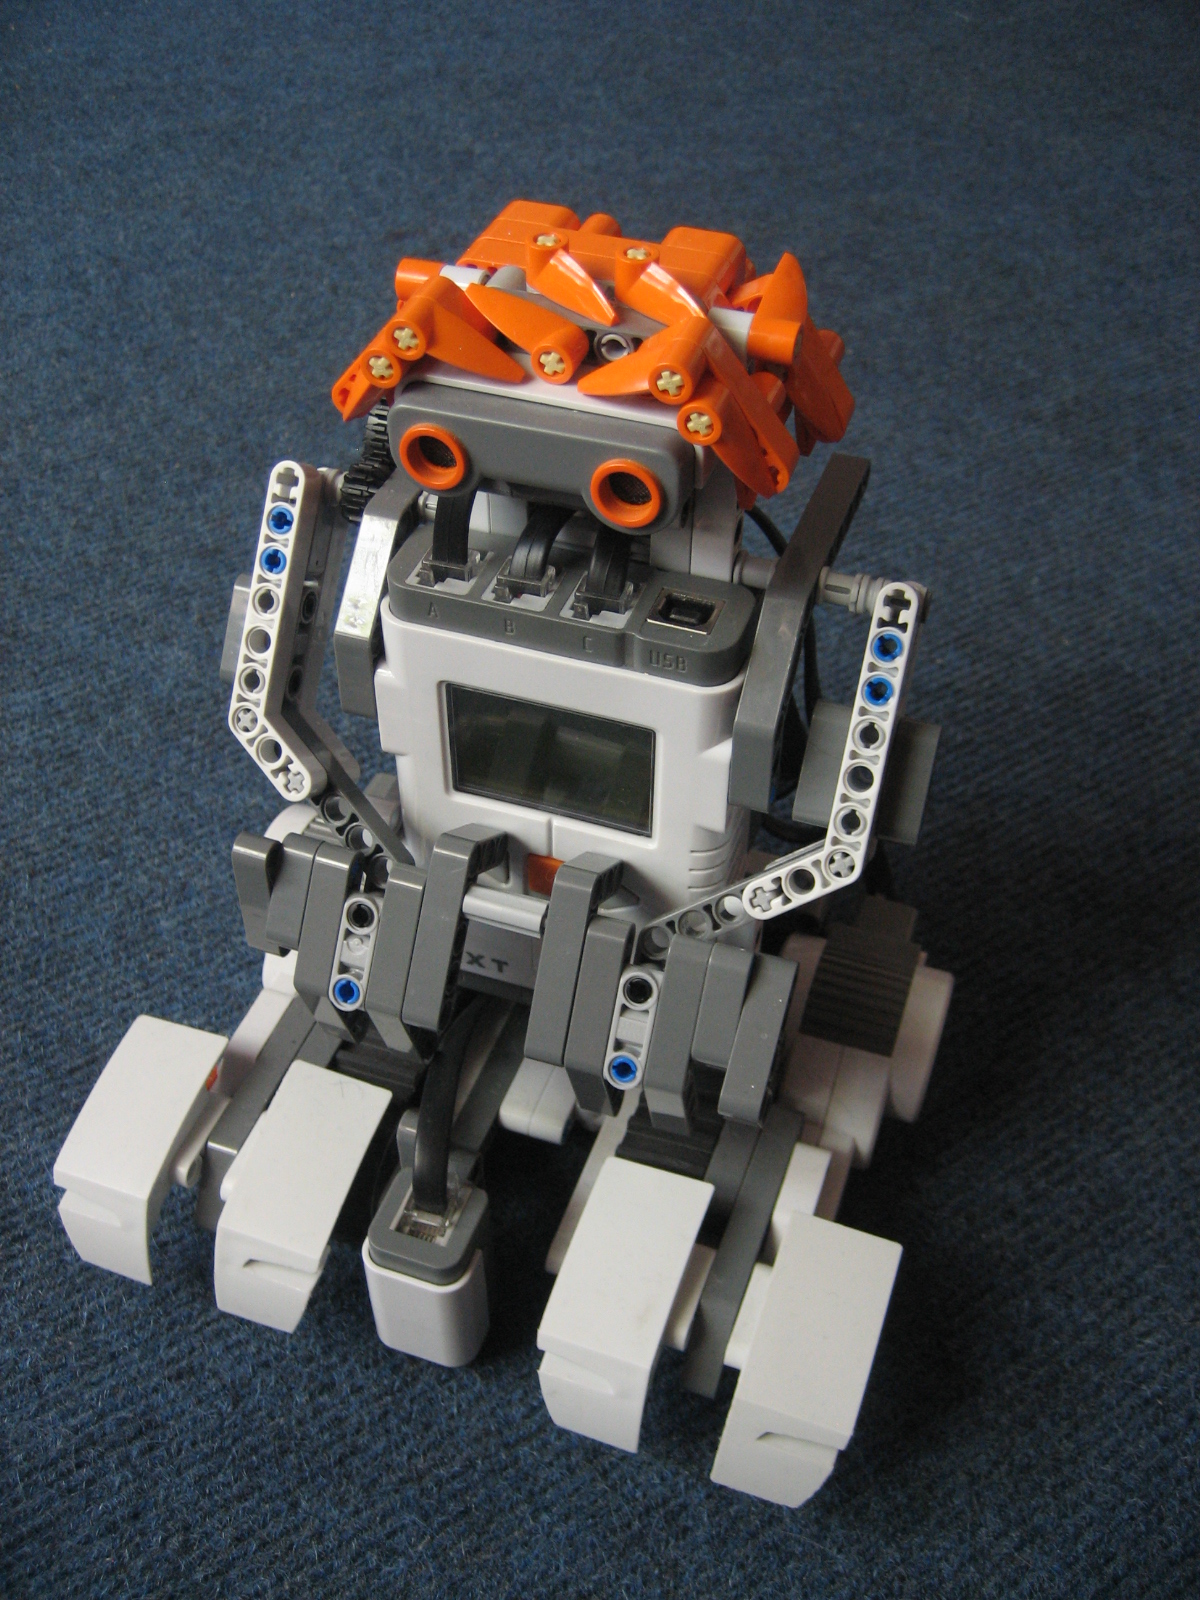 NXTitzki - Basketball playing LEGO Robot